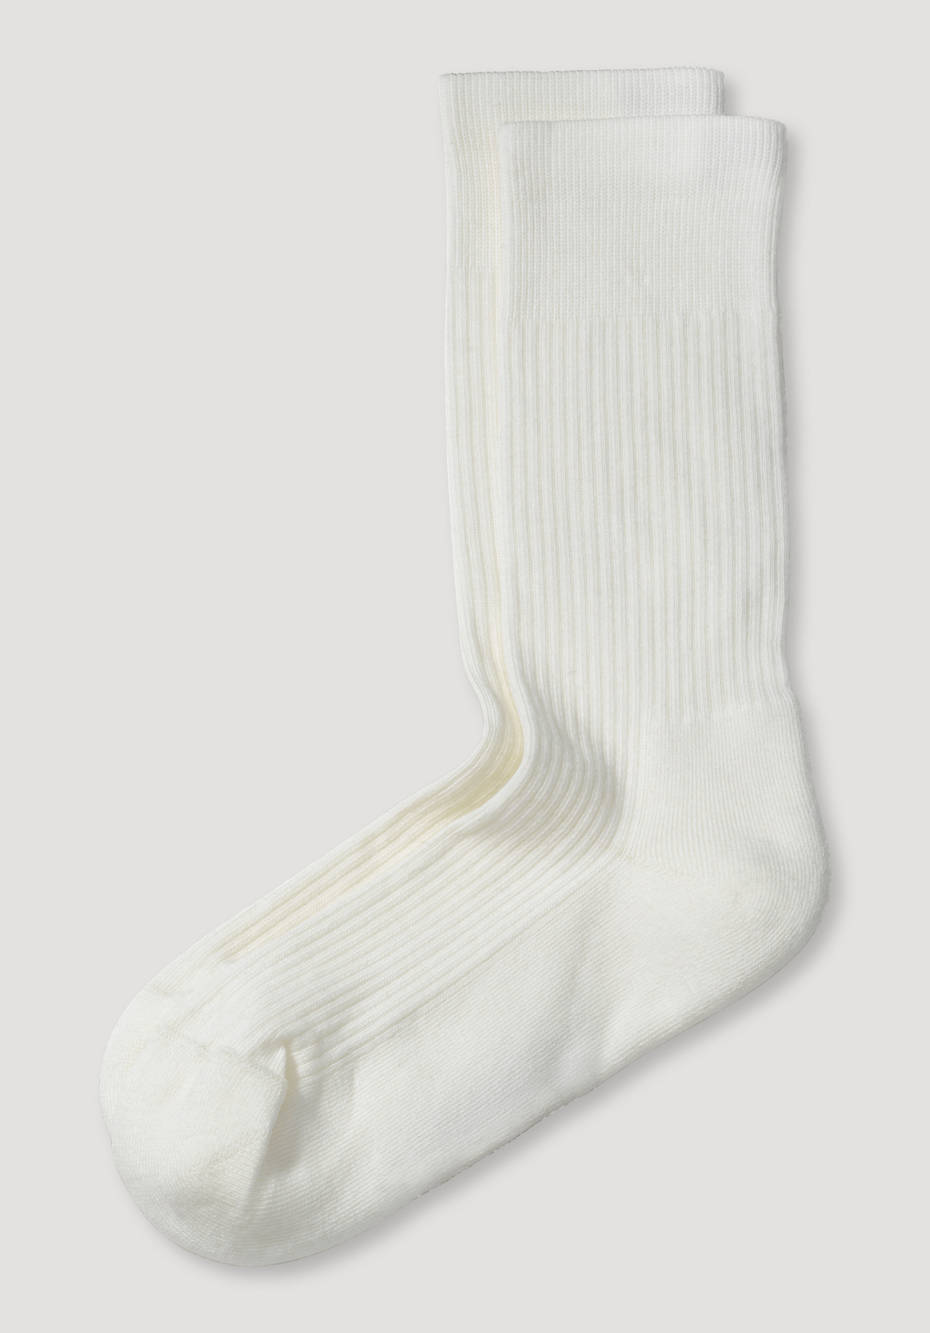 Sports sock made of organic cotton